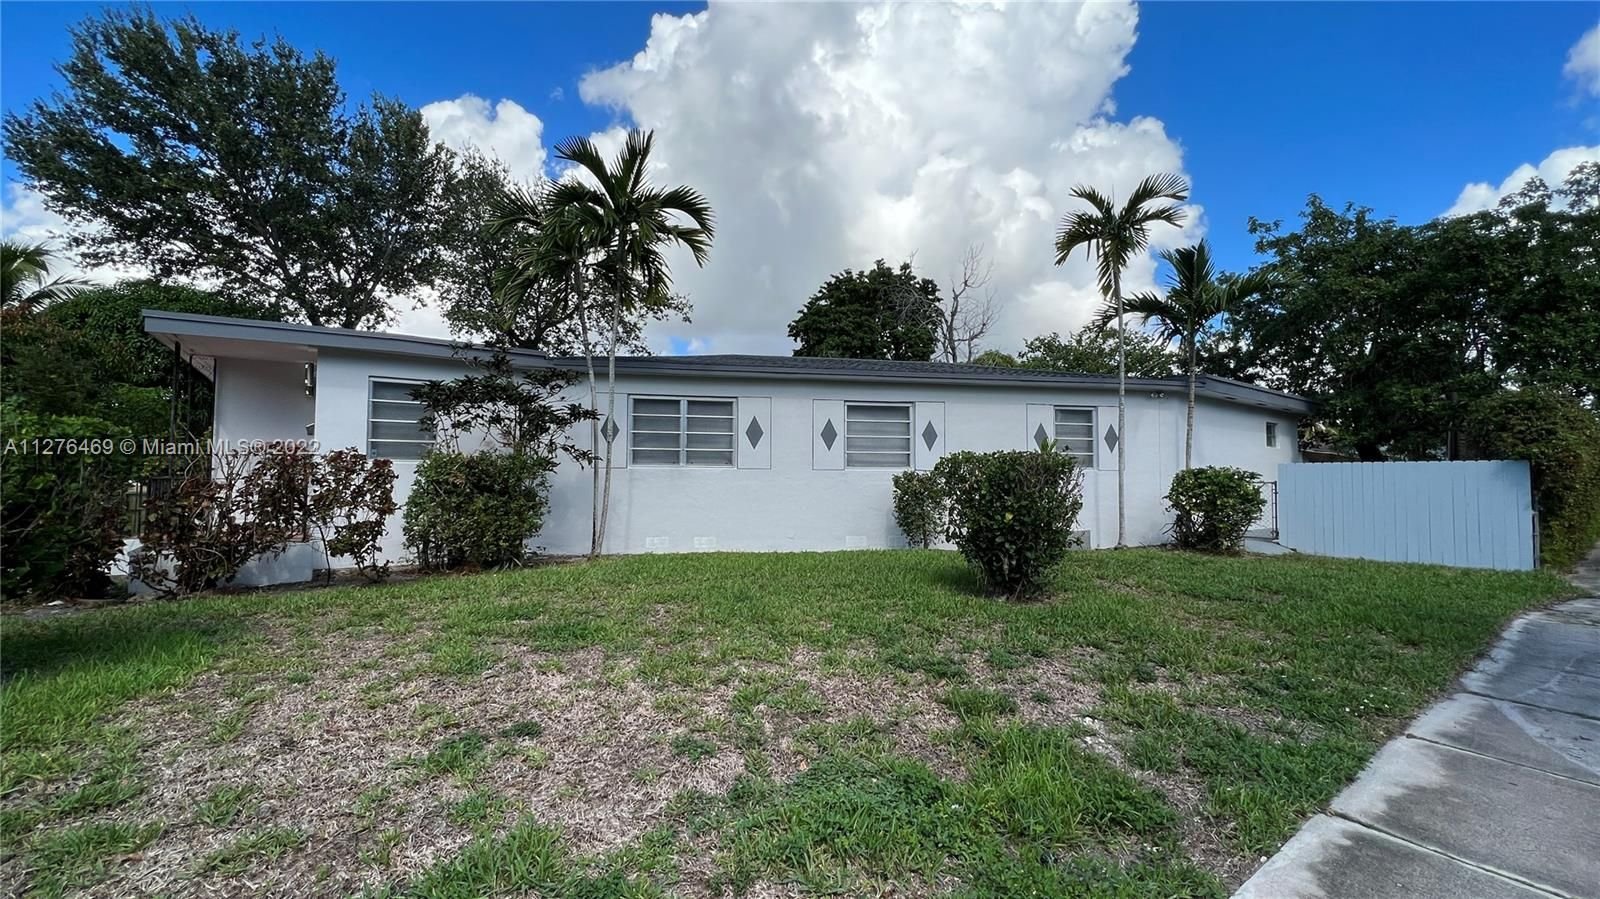 Real estate property located at 205 129th St, Miami-Dade County, North Miami, FL